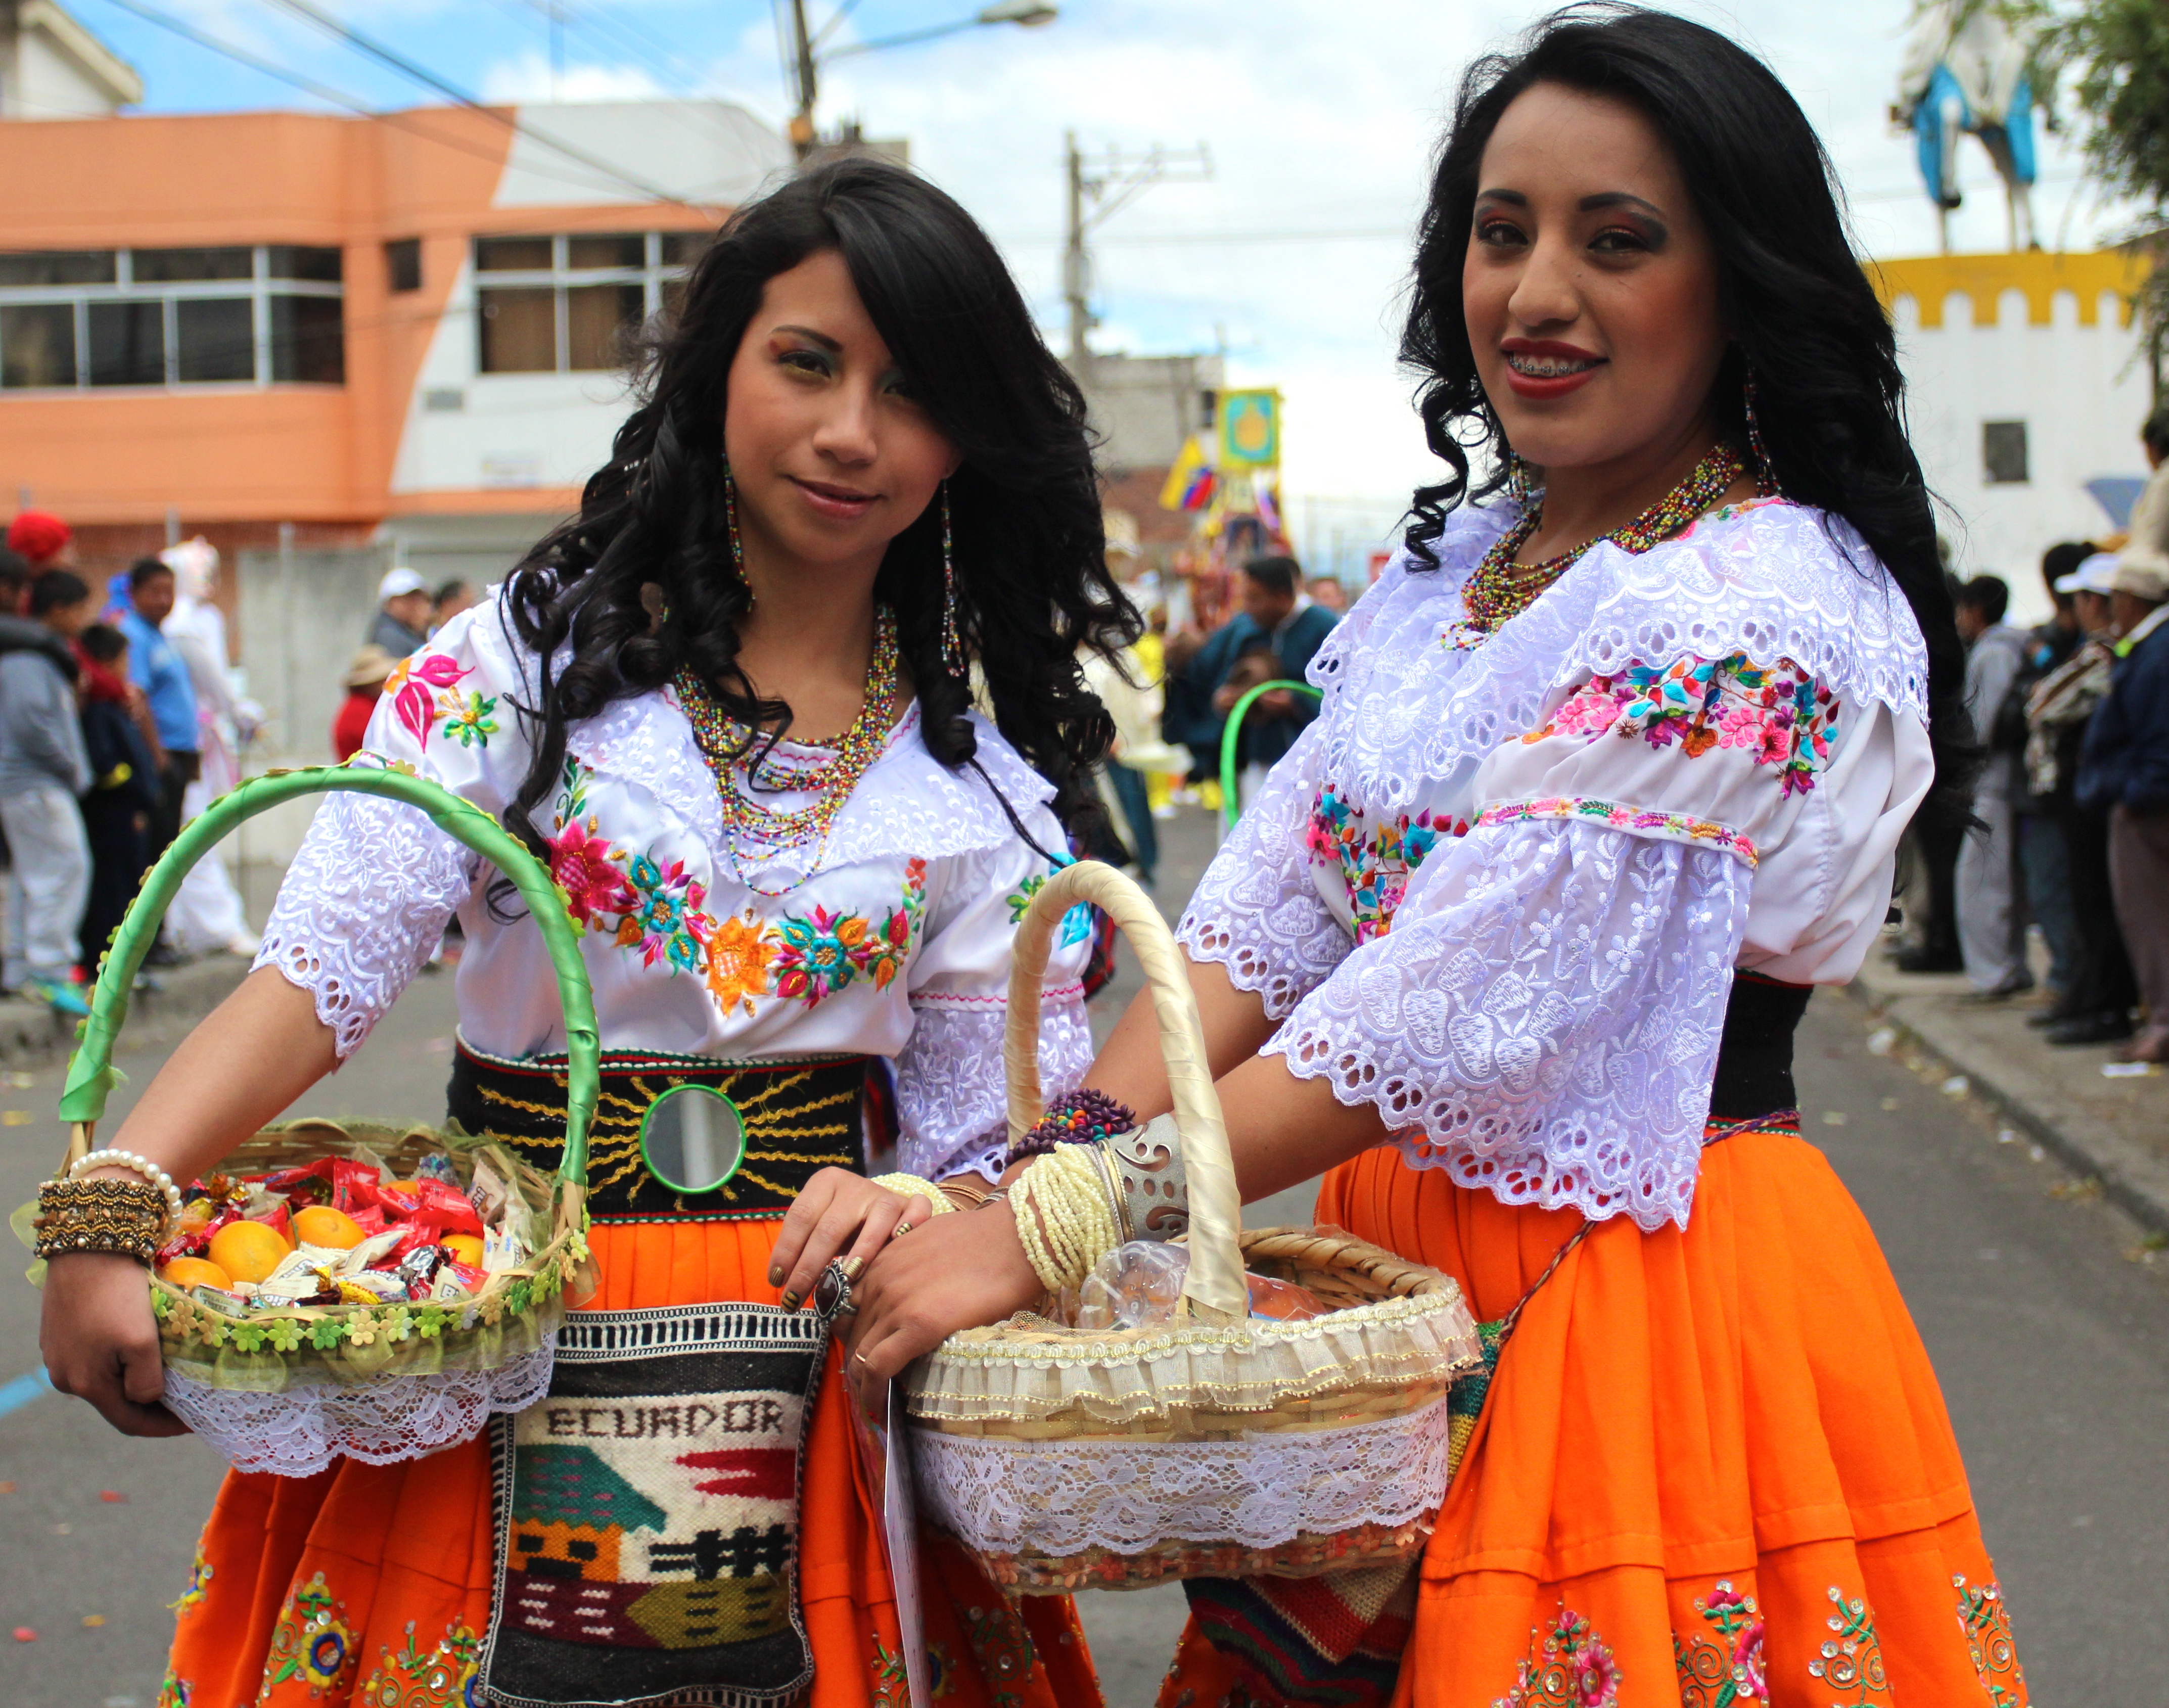 Colors of La Mama Negra festival in Latacunga, Ecuador.